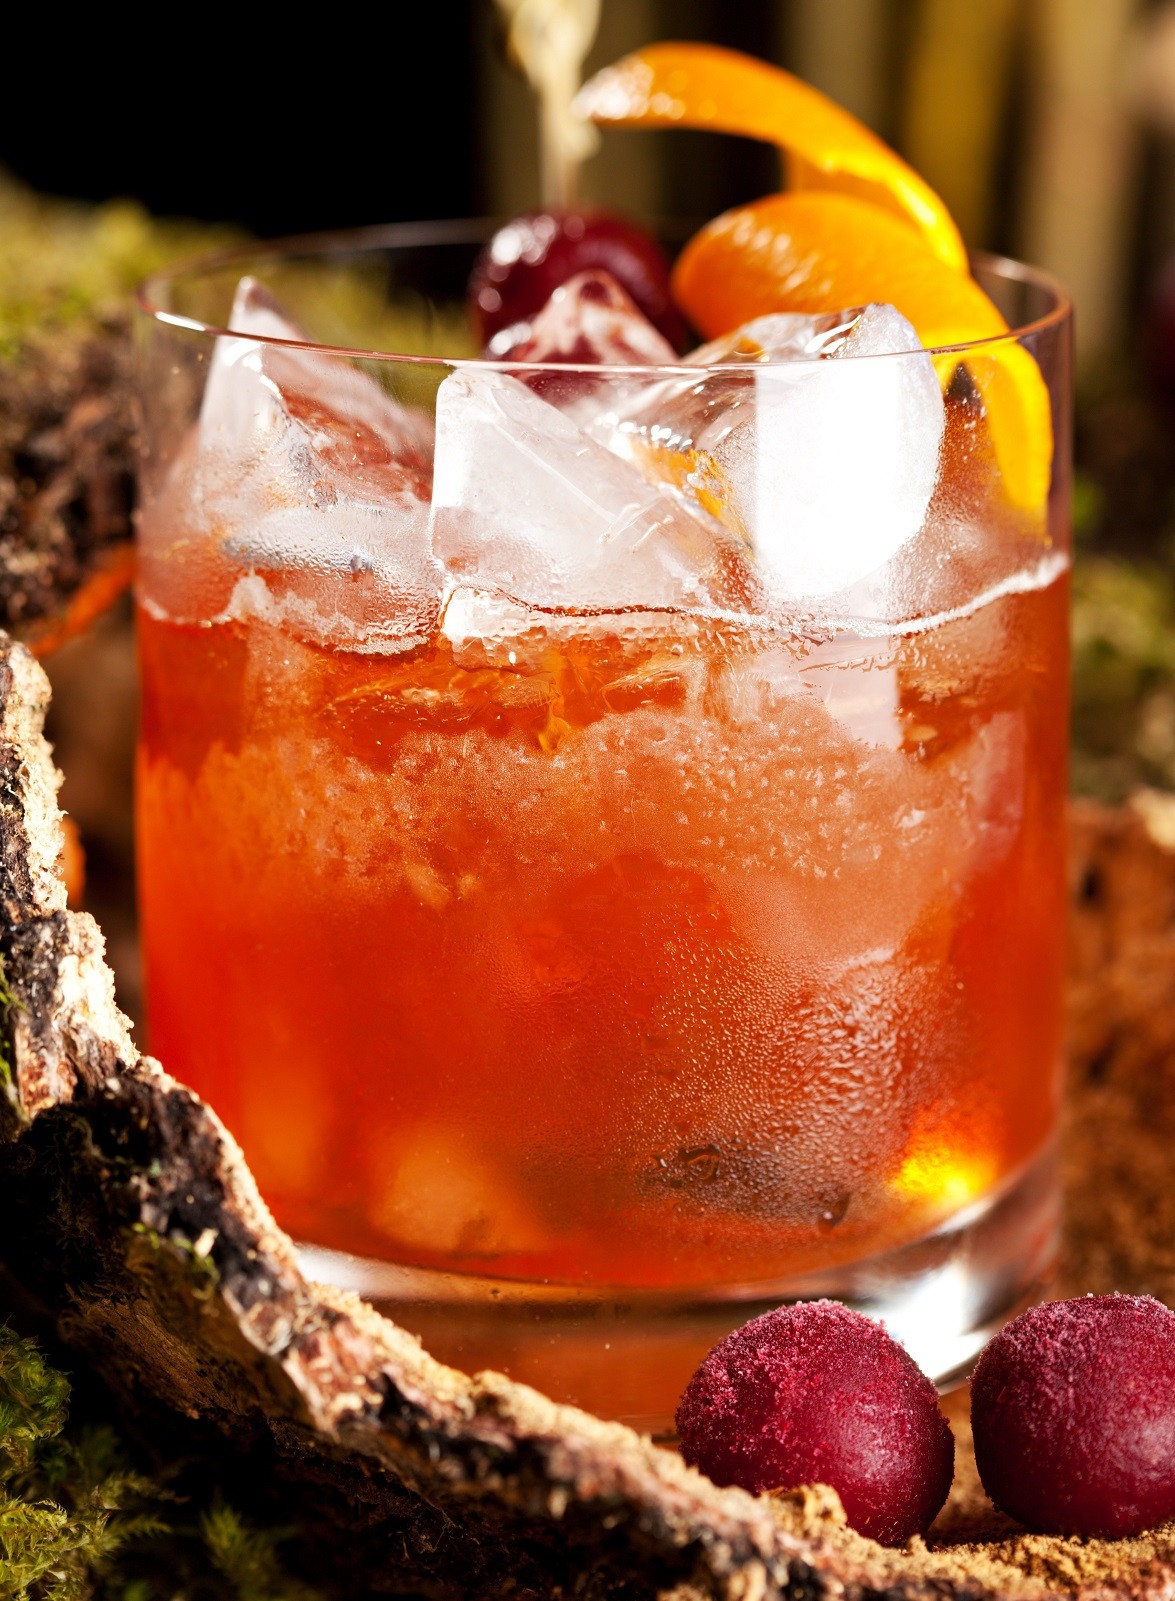 Old Fashion Cocktail – Bourbon, Cane Sugar, Bitter and Orange Peel